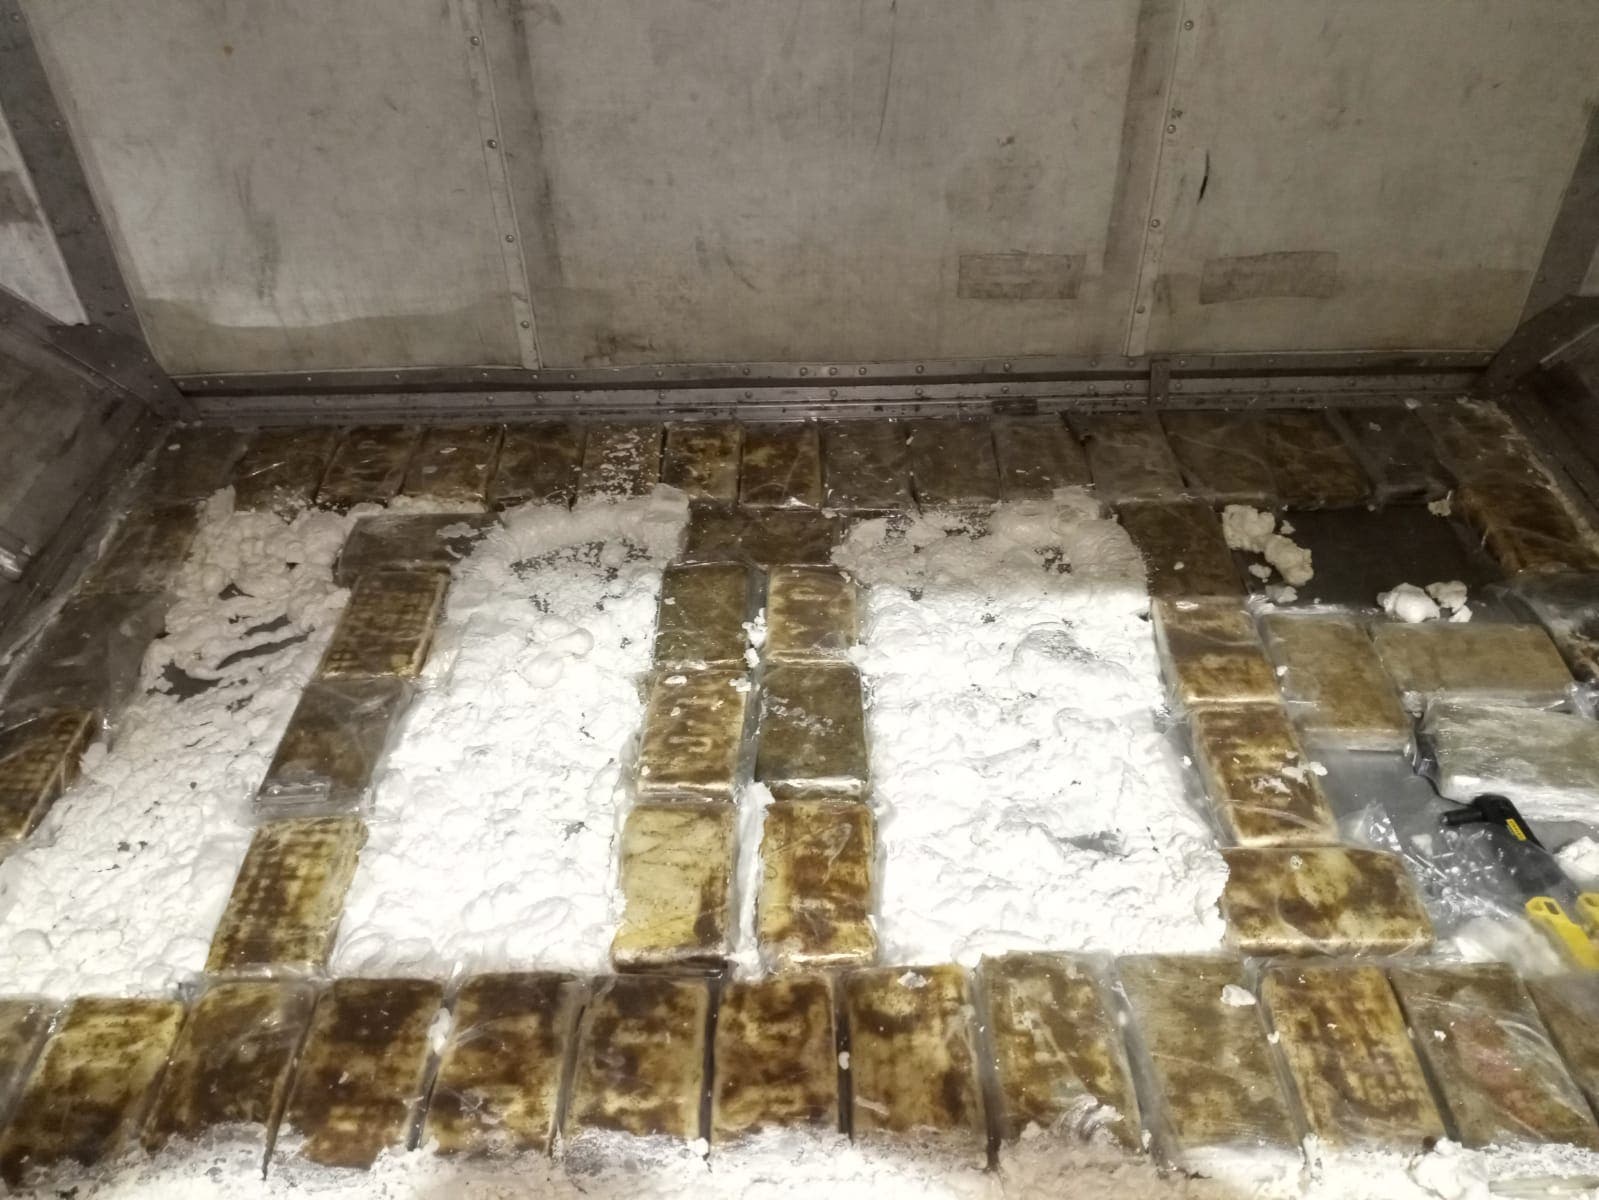 DNCD se incauta 58 paquetes de cocaína en piso de contenedor en el AILA 